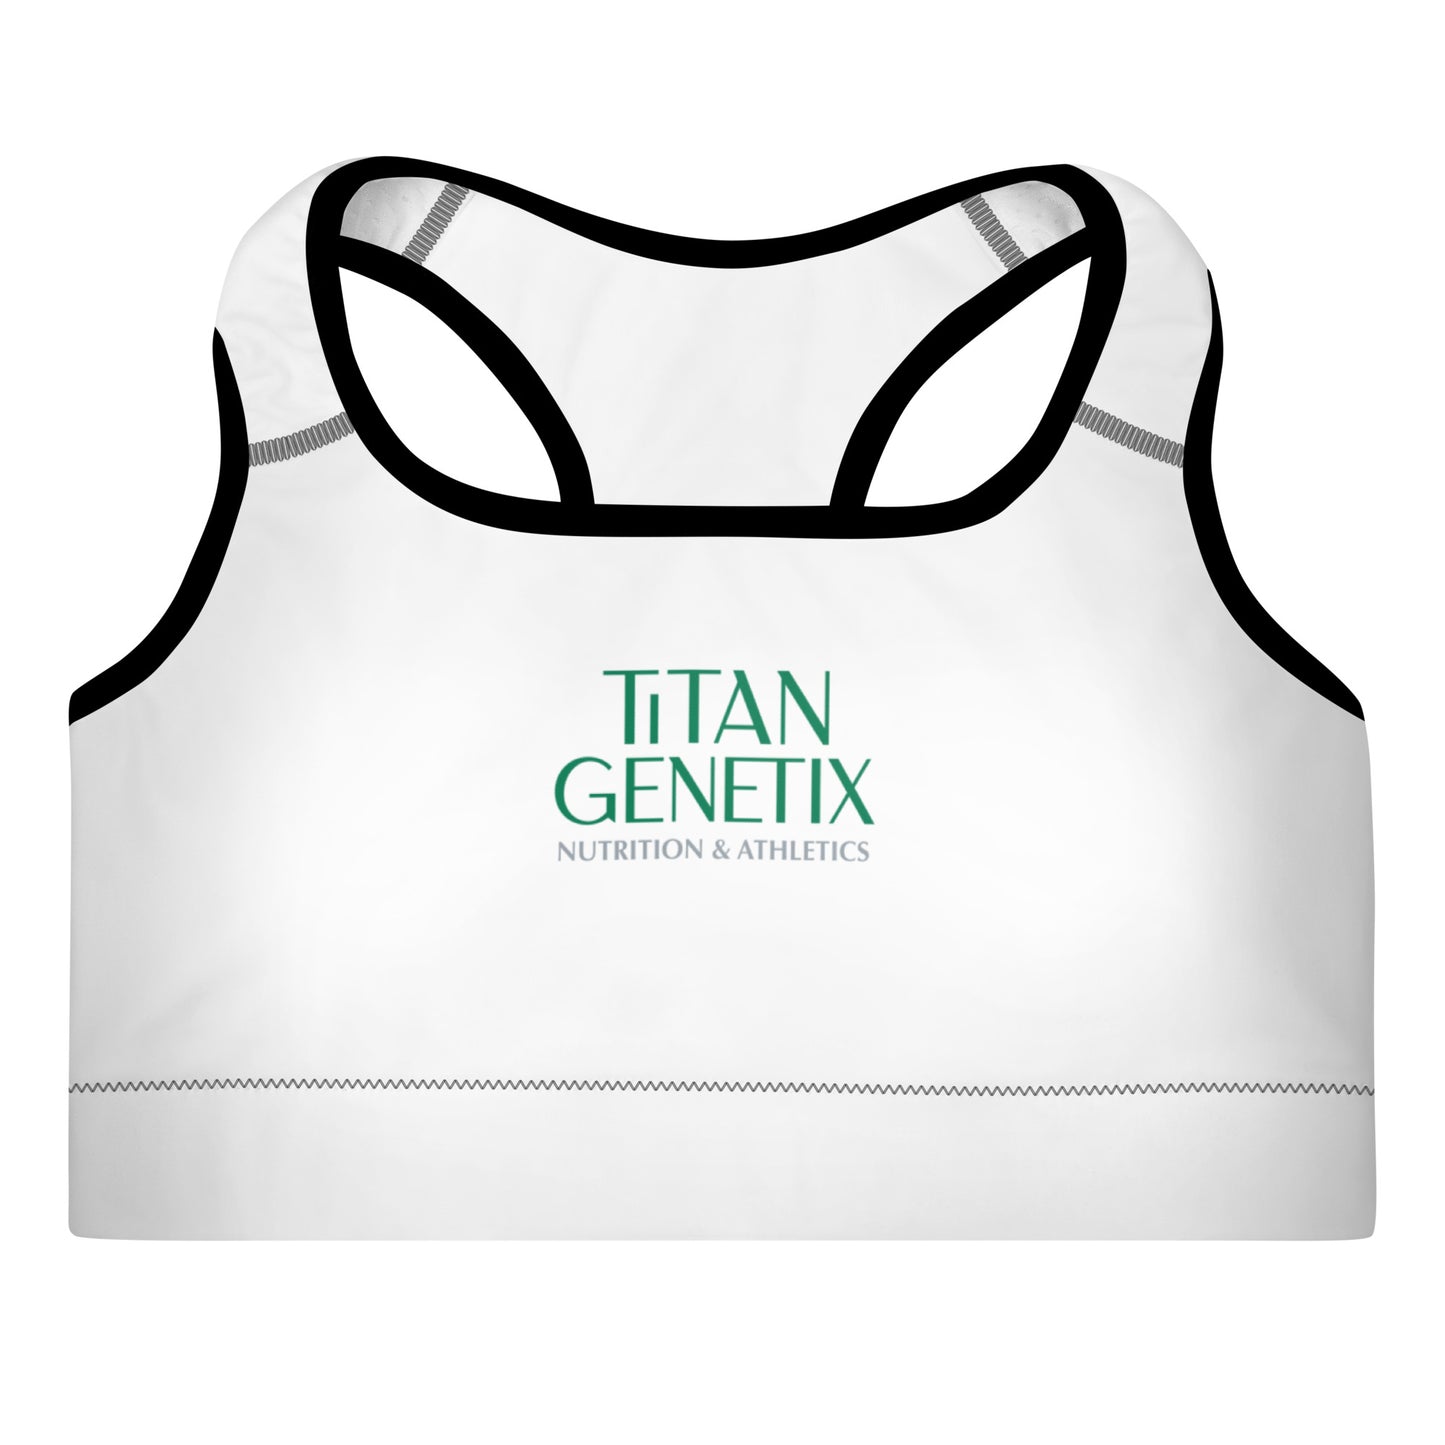 Titan Genetix Nutrition & Athletics - Padded Sports Bra